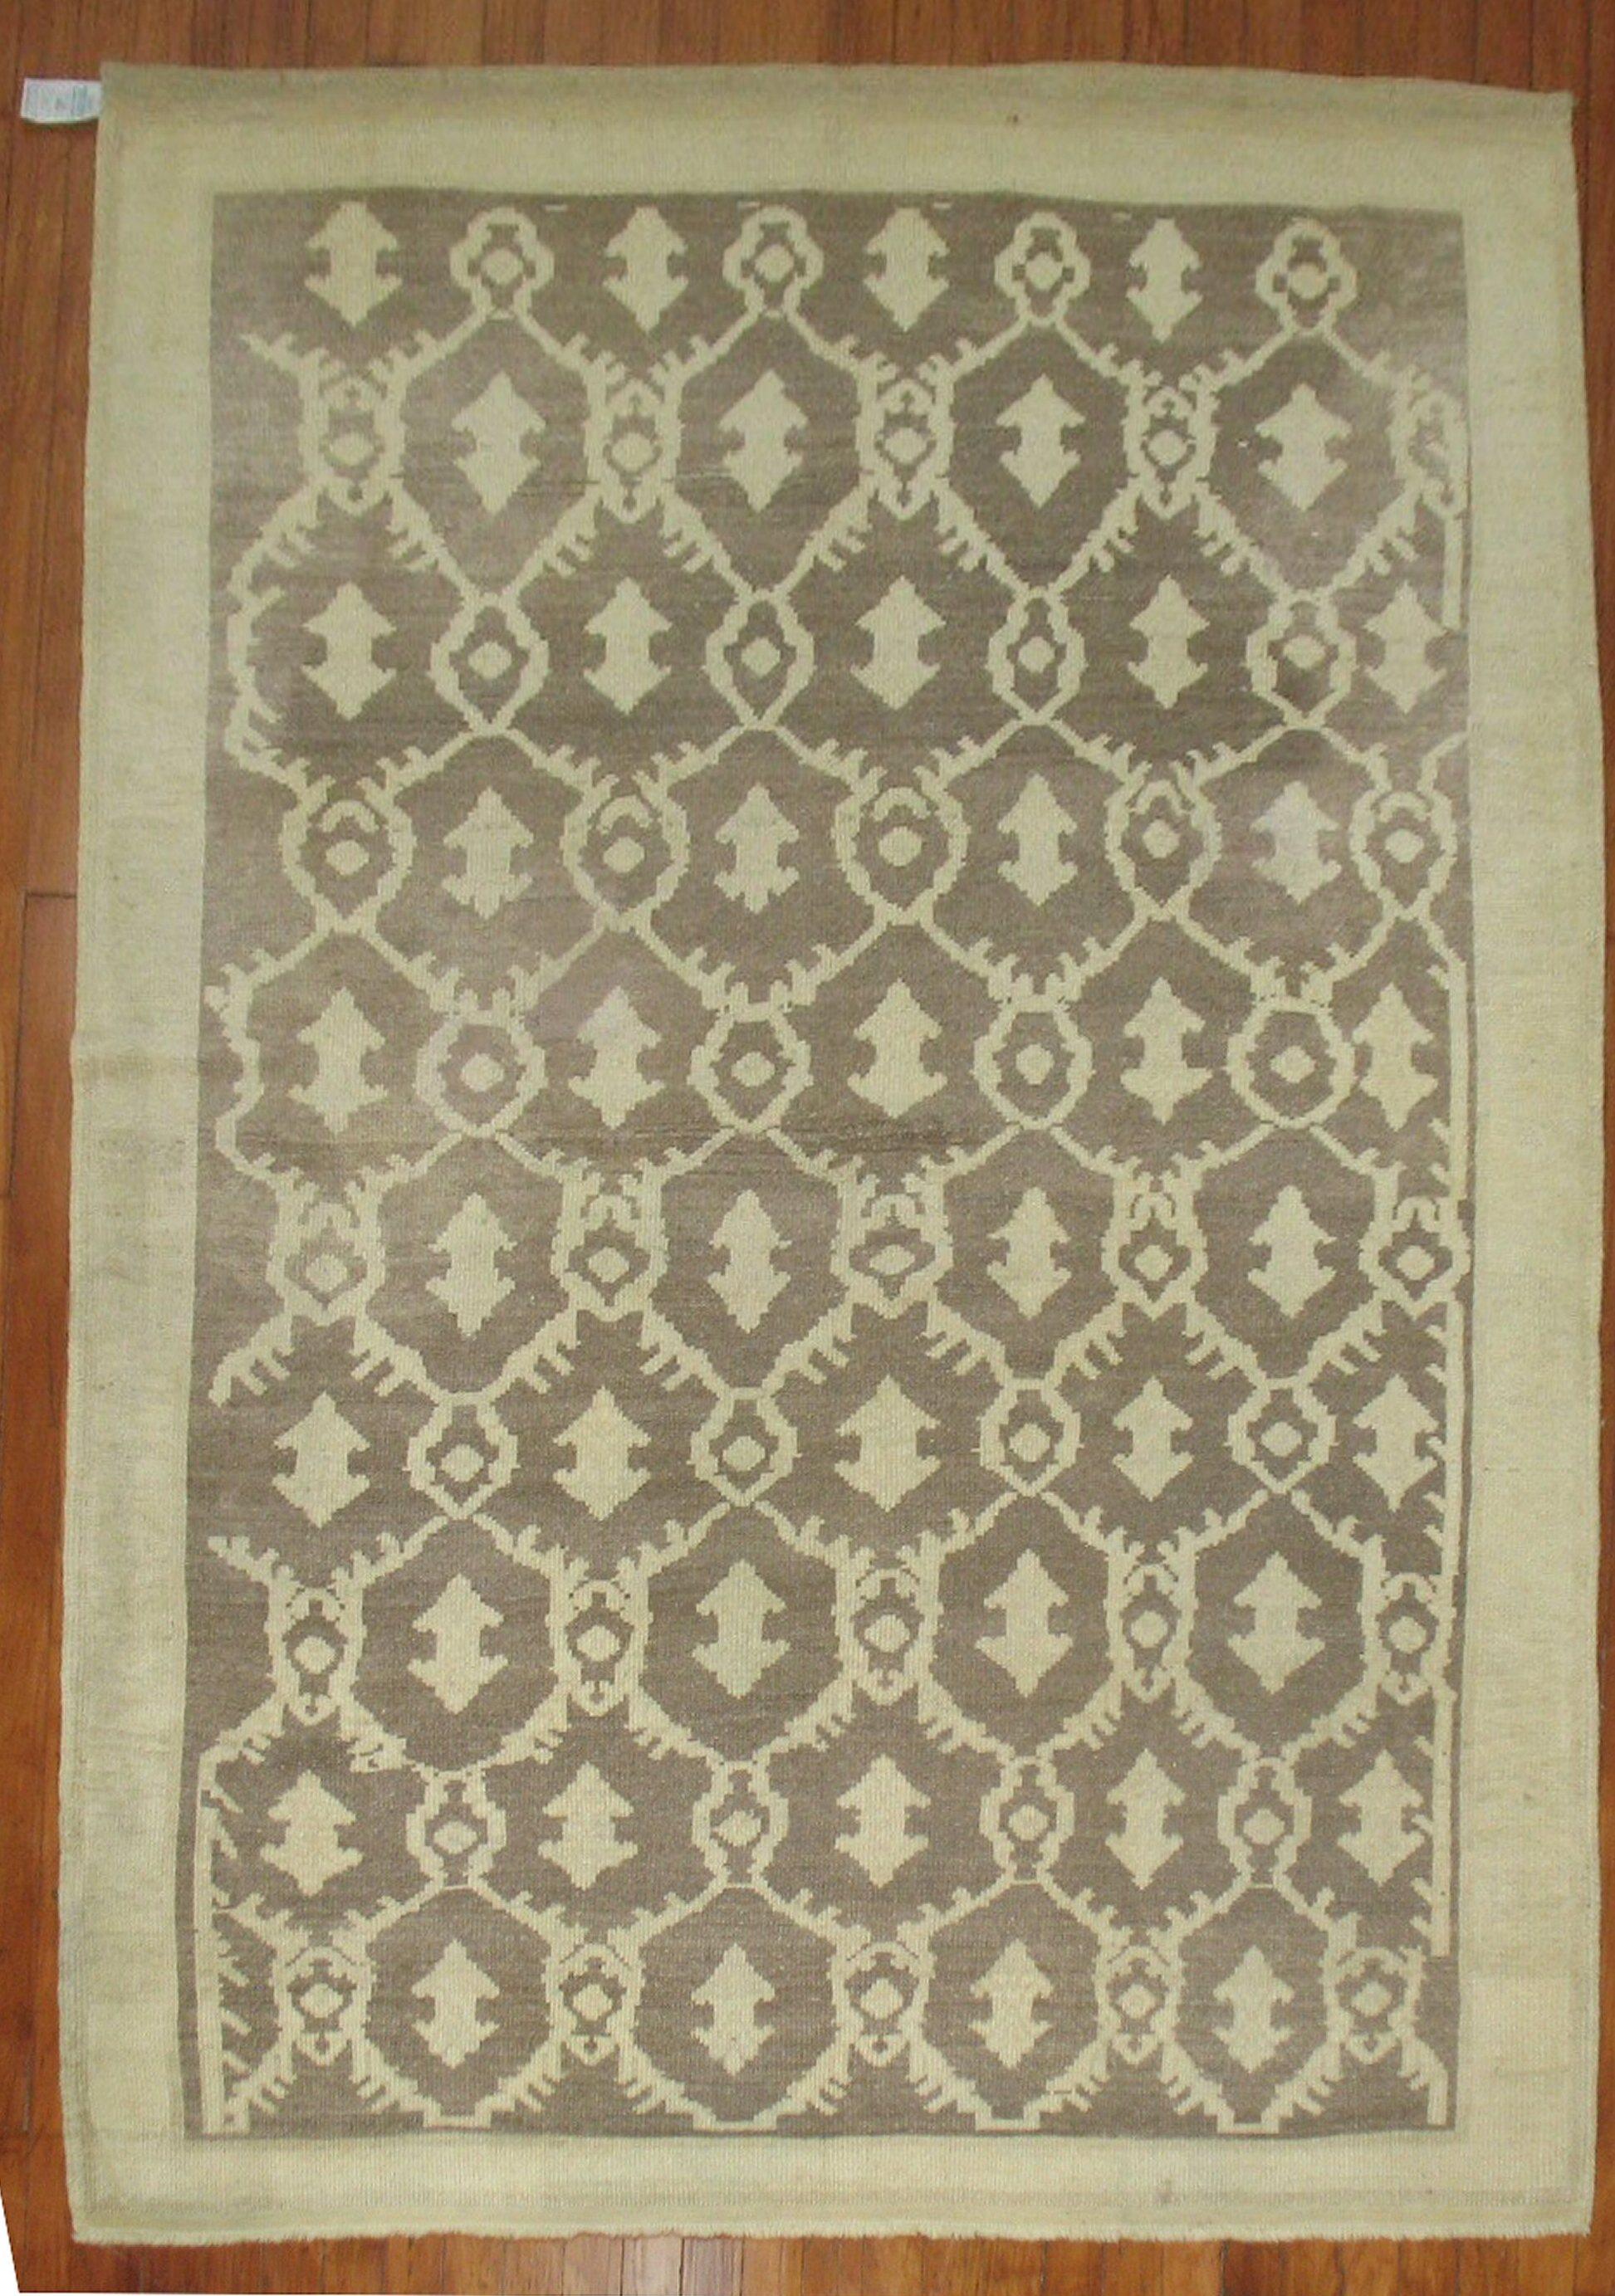 Mid-20th century Turkish Konya rug in brown and khaki

Measures: 4'11'' x 7'4''.